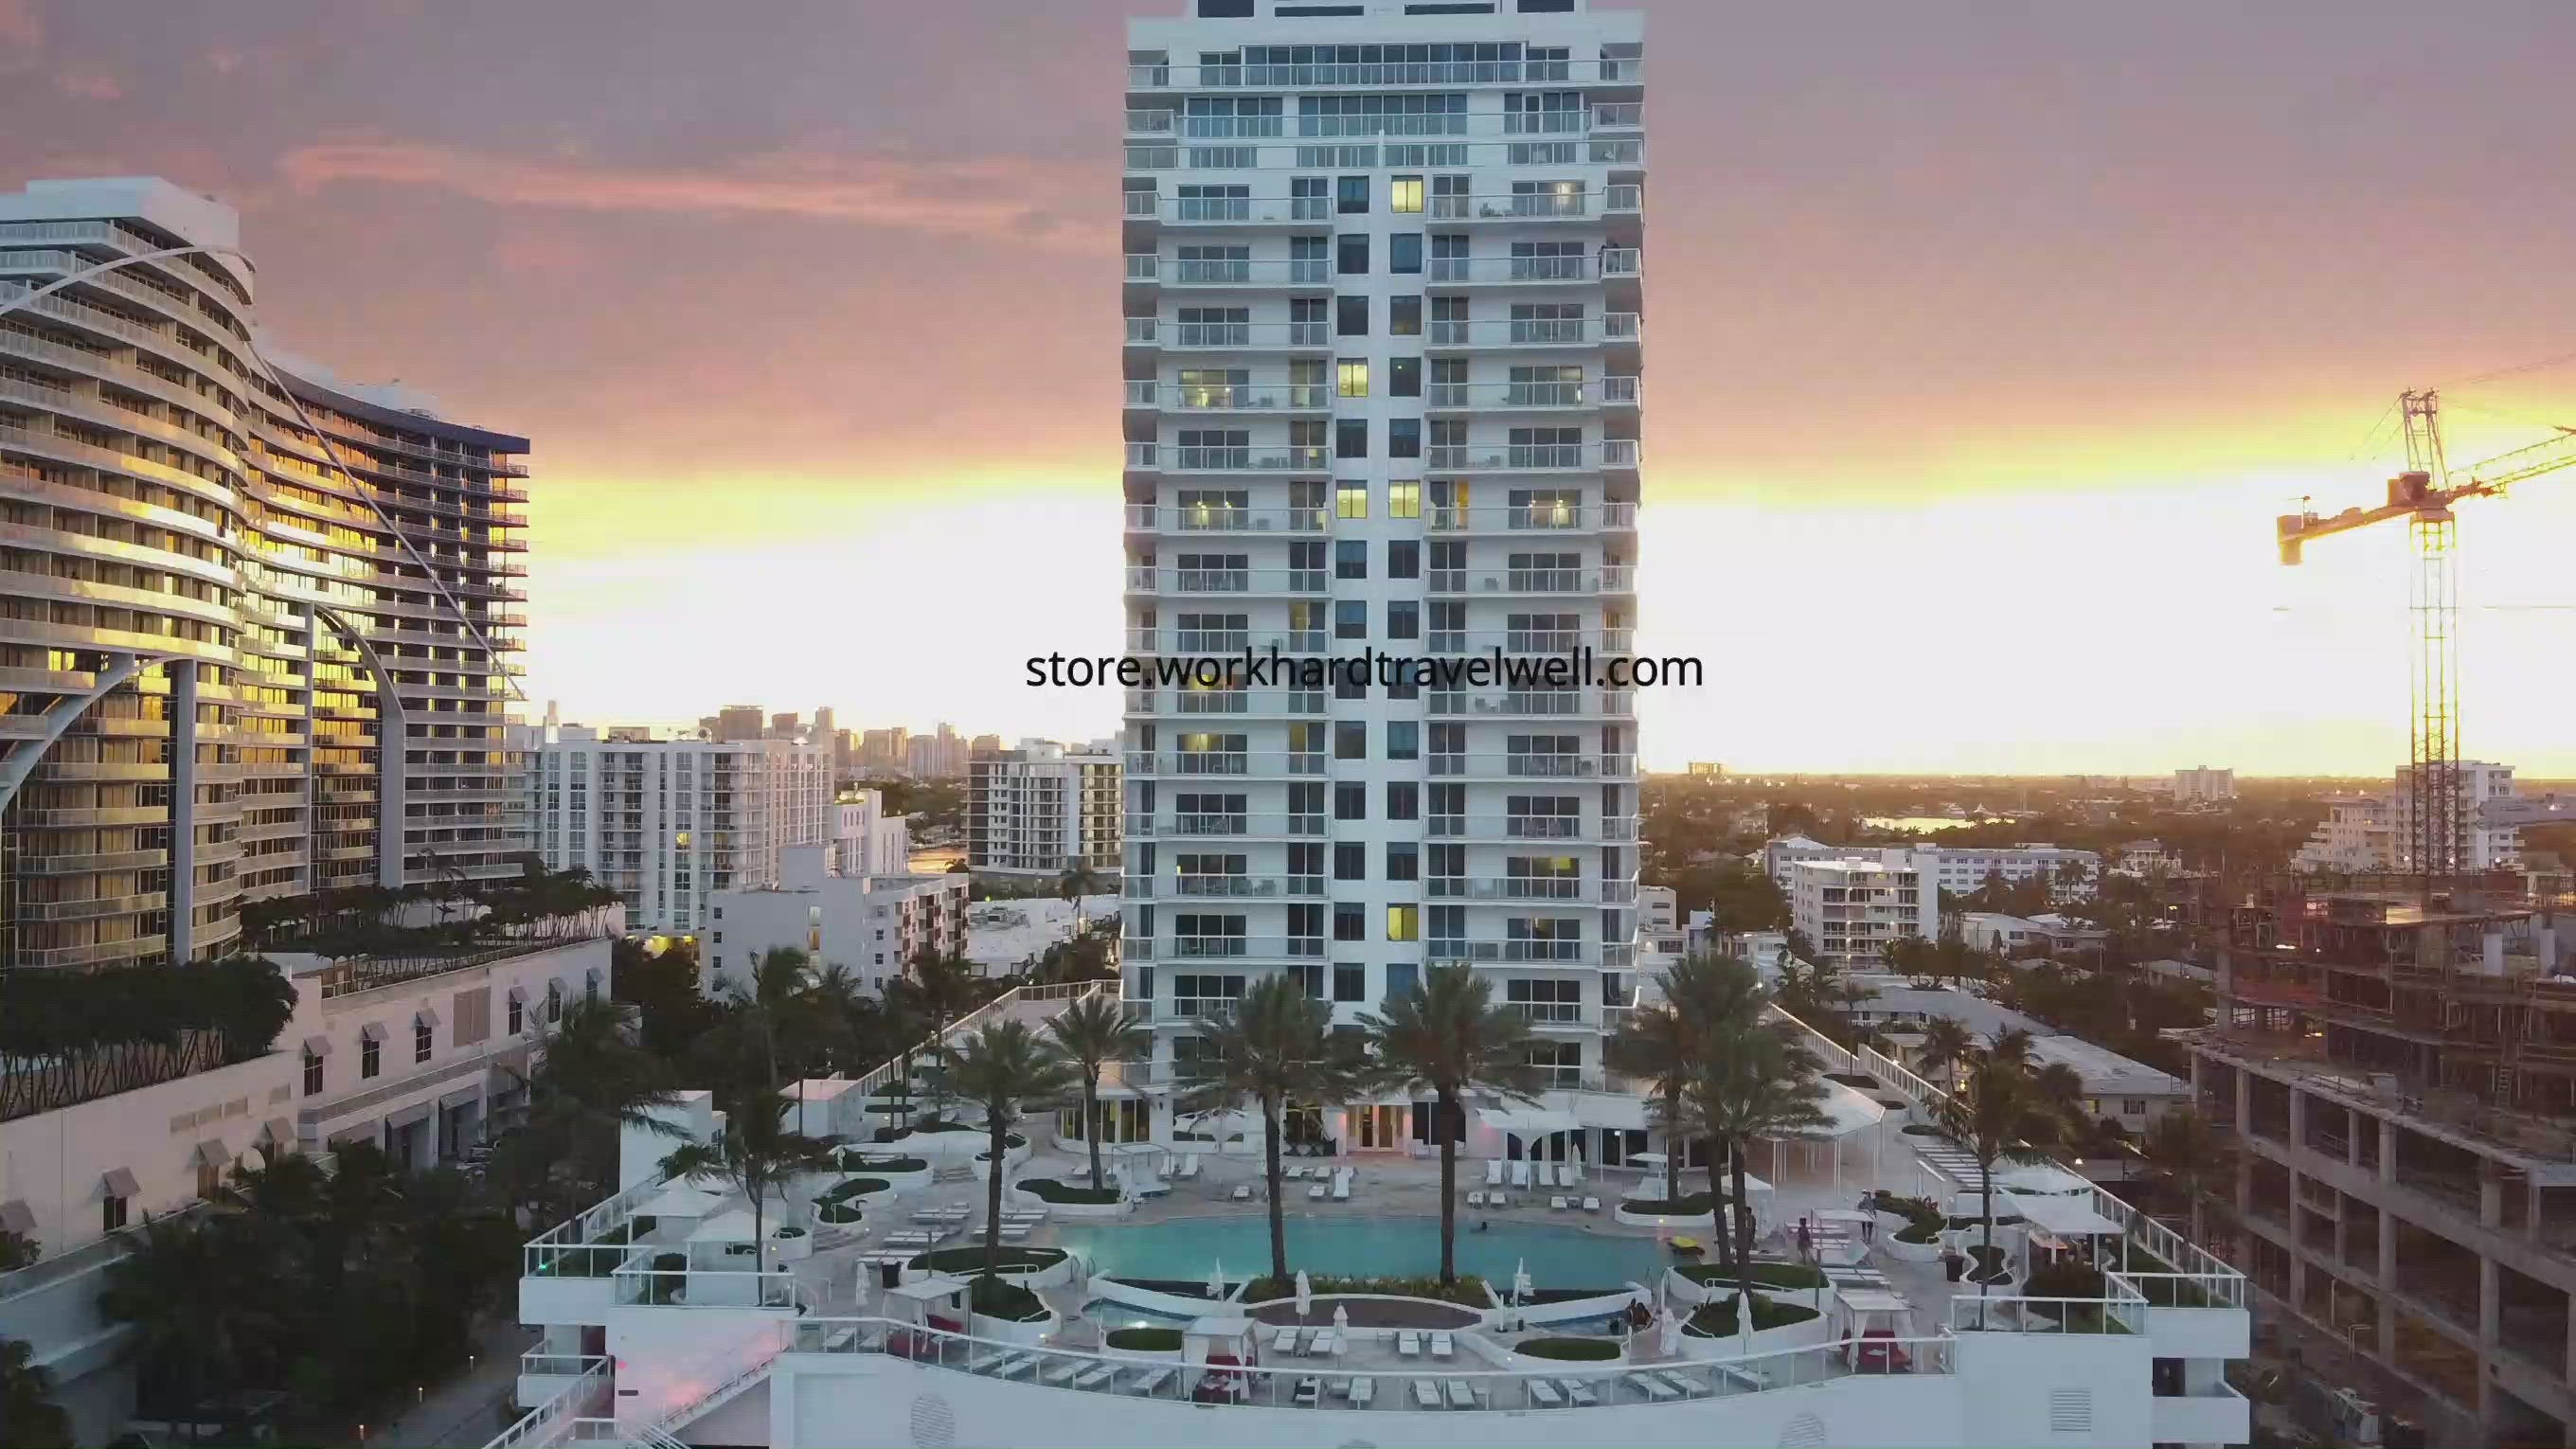 Fort Lauderdale Beach/ Hilton Hotel Drone Video